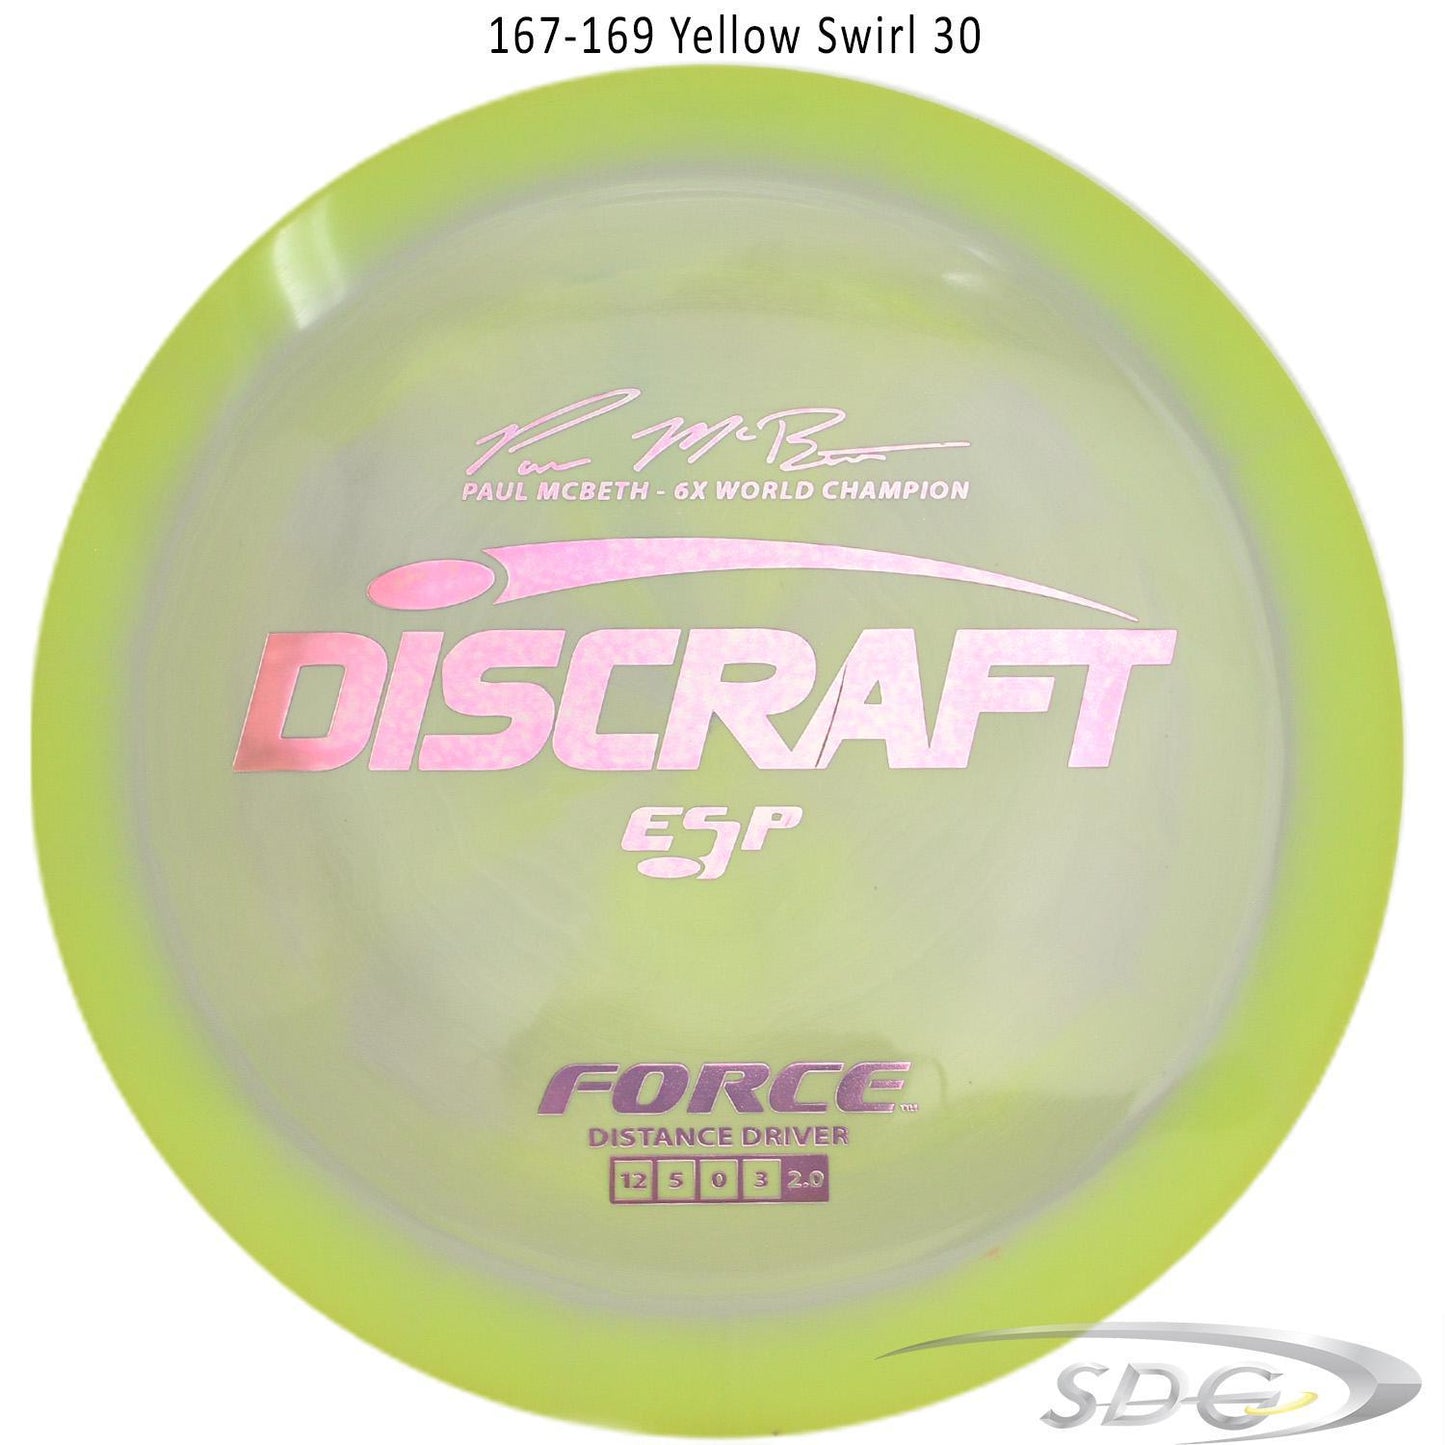 discraft-esp-force-6x-paul-mcbeth-signature-disc-golf-distance-driver-169-160-weights 167-169 Yellow Swirl 30 